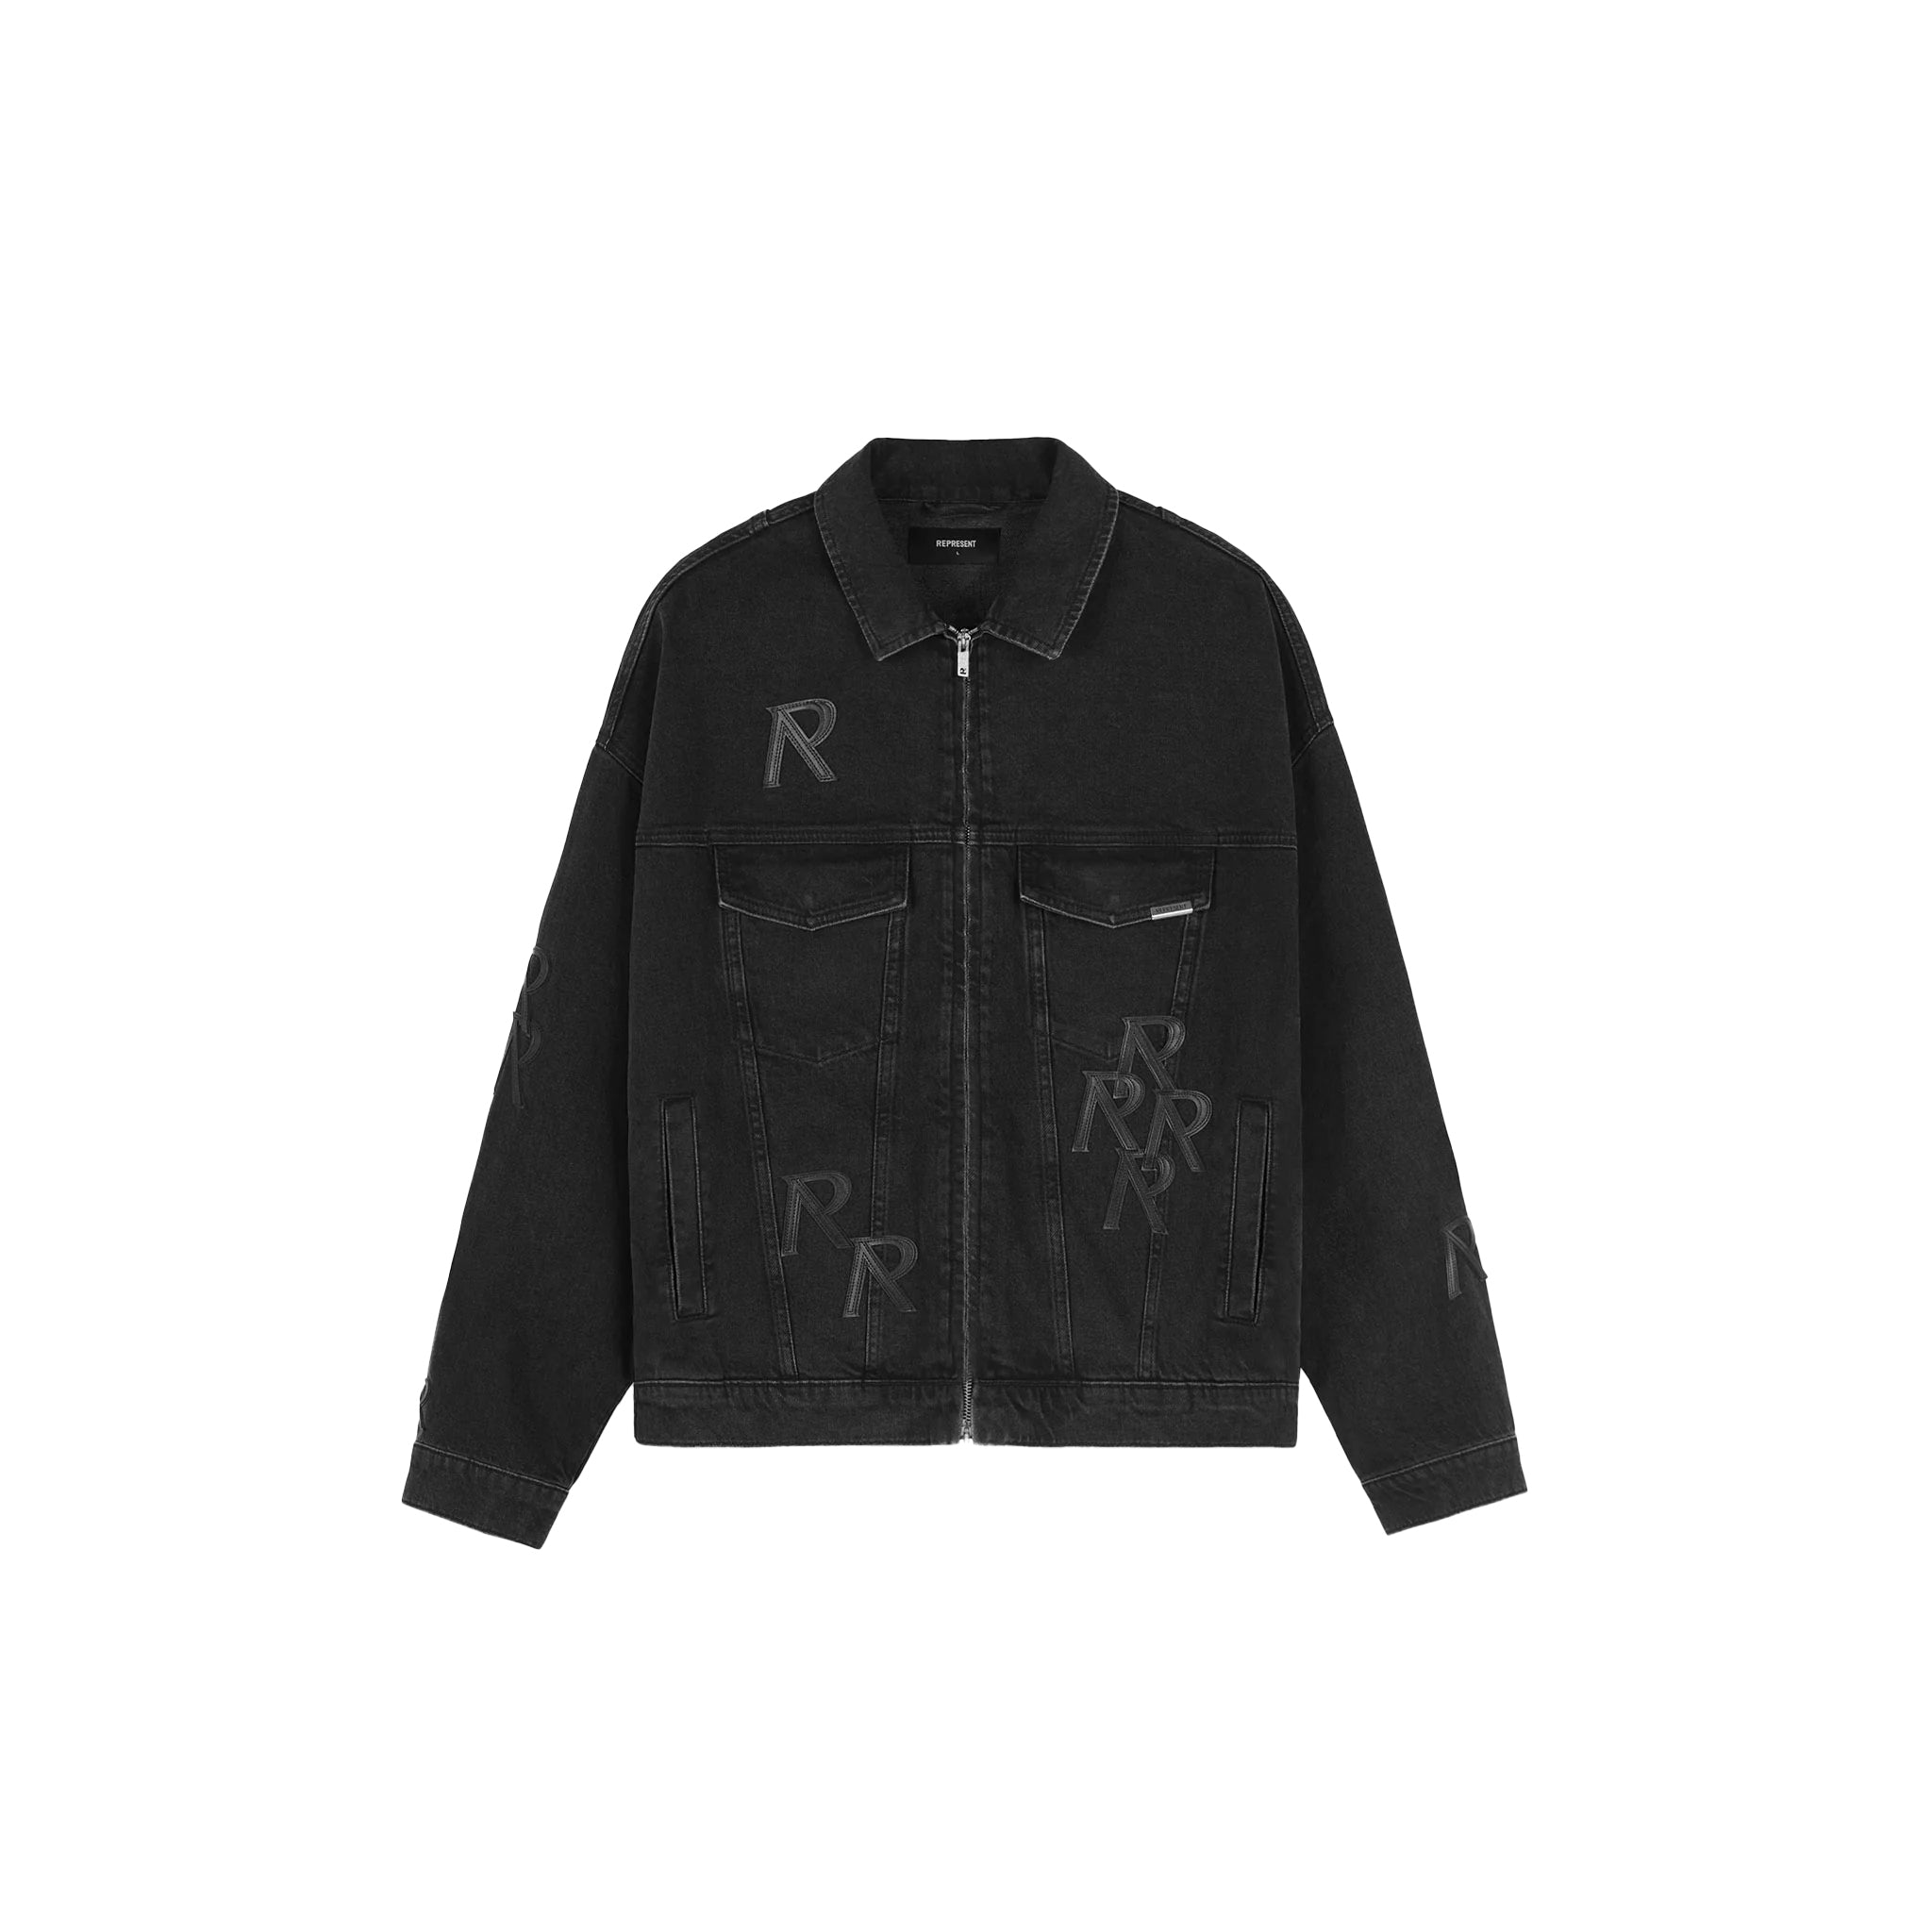 Soul Star fleece lined denim jacket in black - ShopStyle